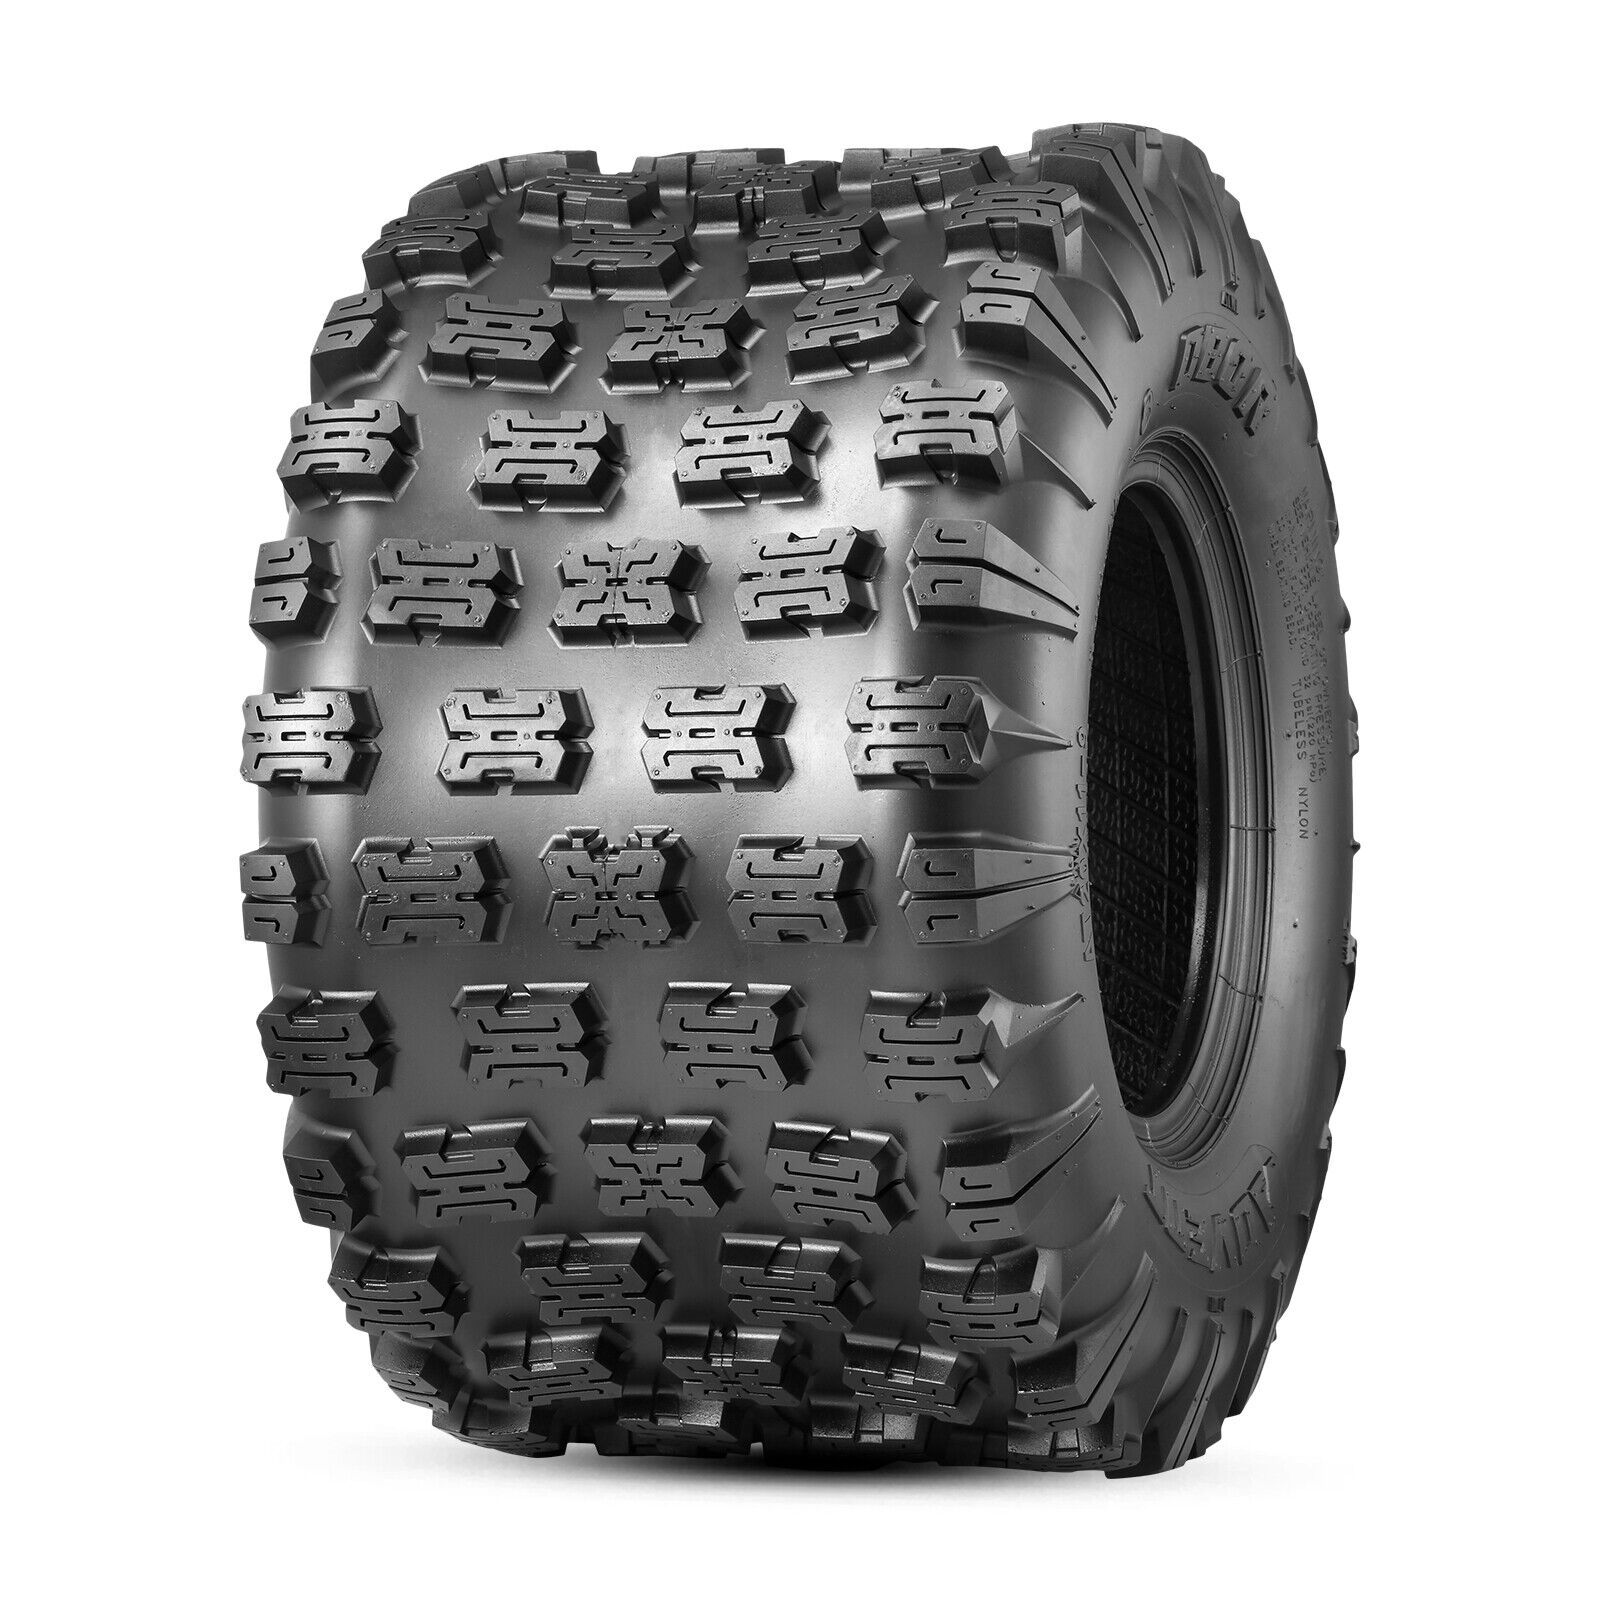 OBOR Advent 20x11-9 ATV Tires 6Ply Heavy Duty All Terrain GNCC Pro Racing Tyre 